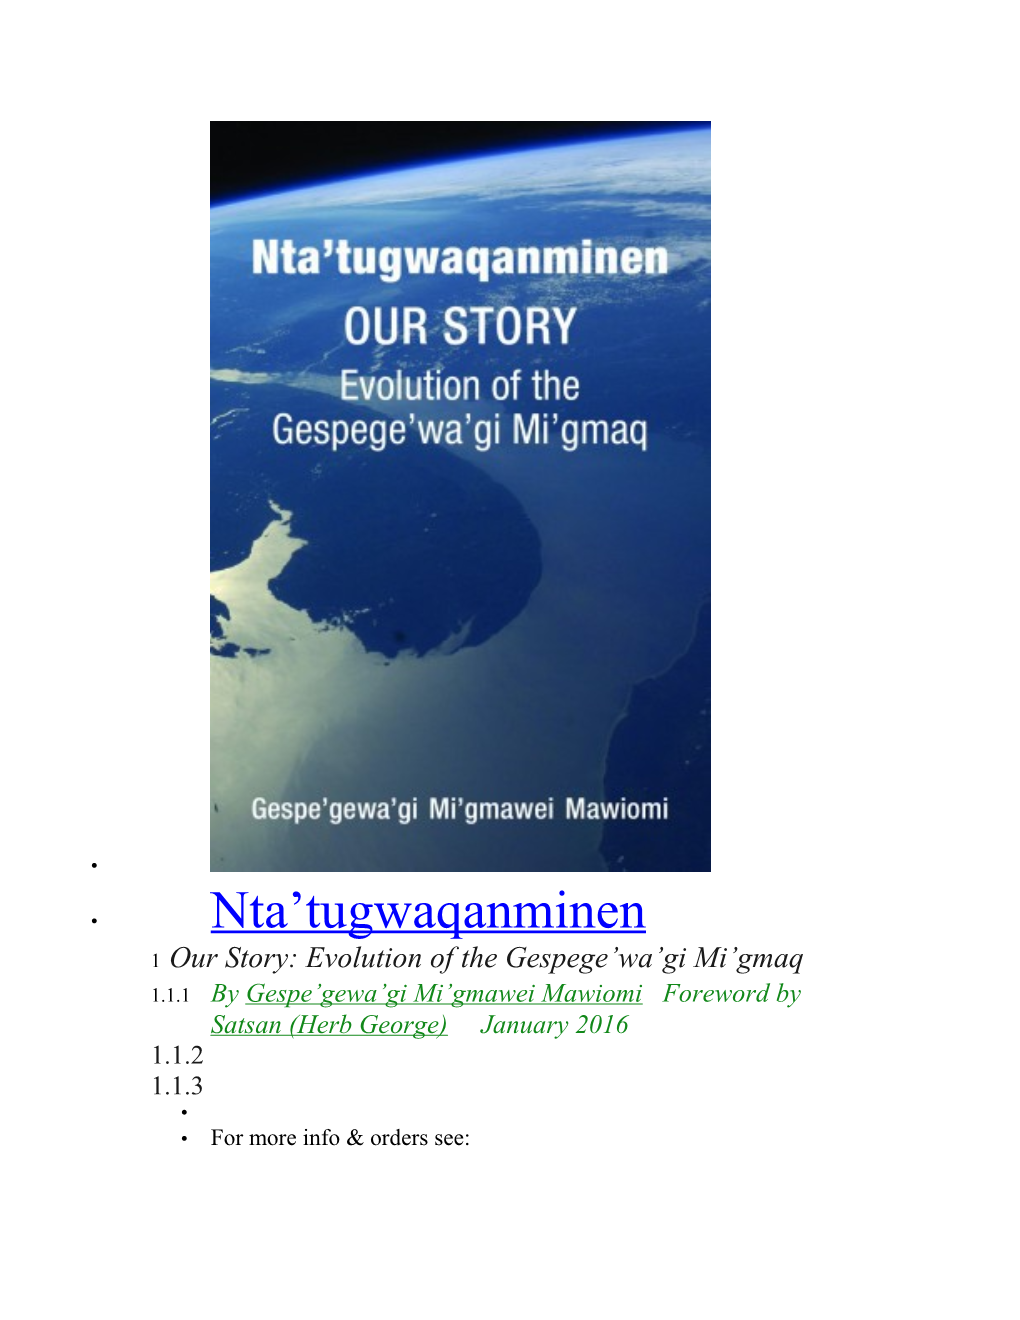 Our Story: Evolution of the Gespege Wa Gi Mi Gmaq